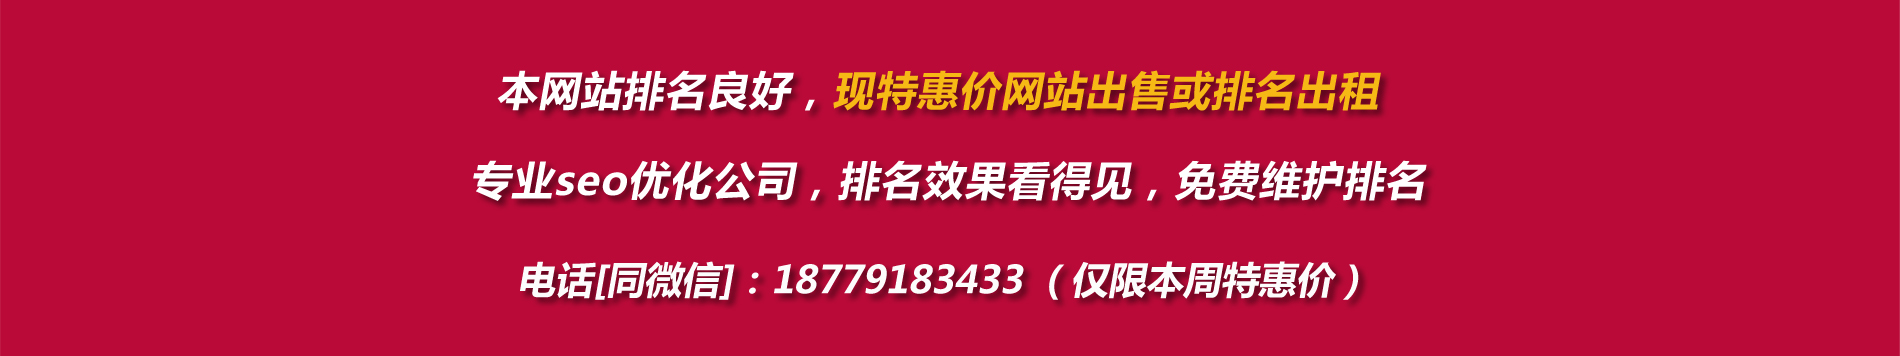 蚌埠公司注册banner